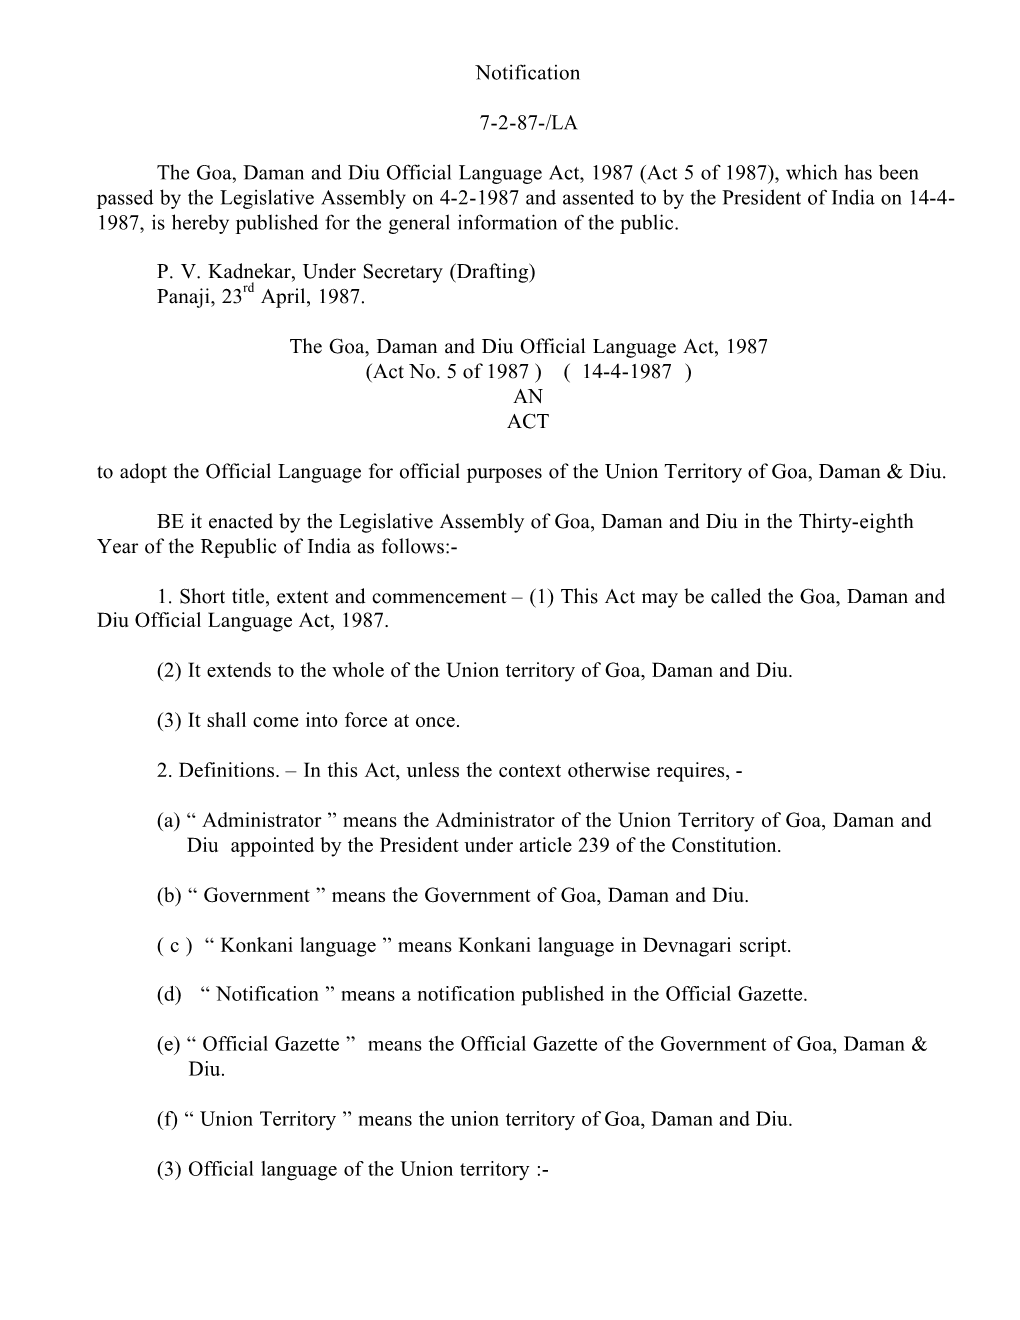 Notification 7-2-87-/LA the Goa, Daman and Diu Official Language